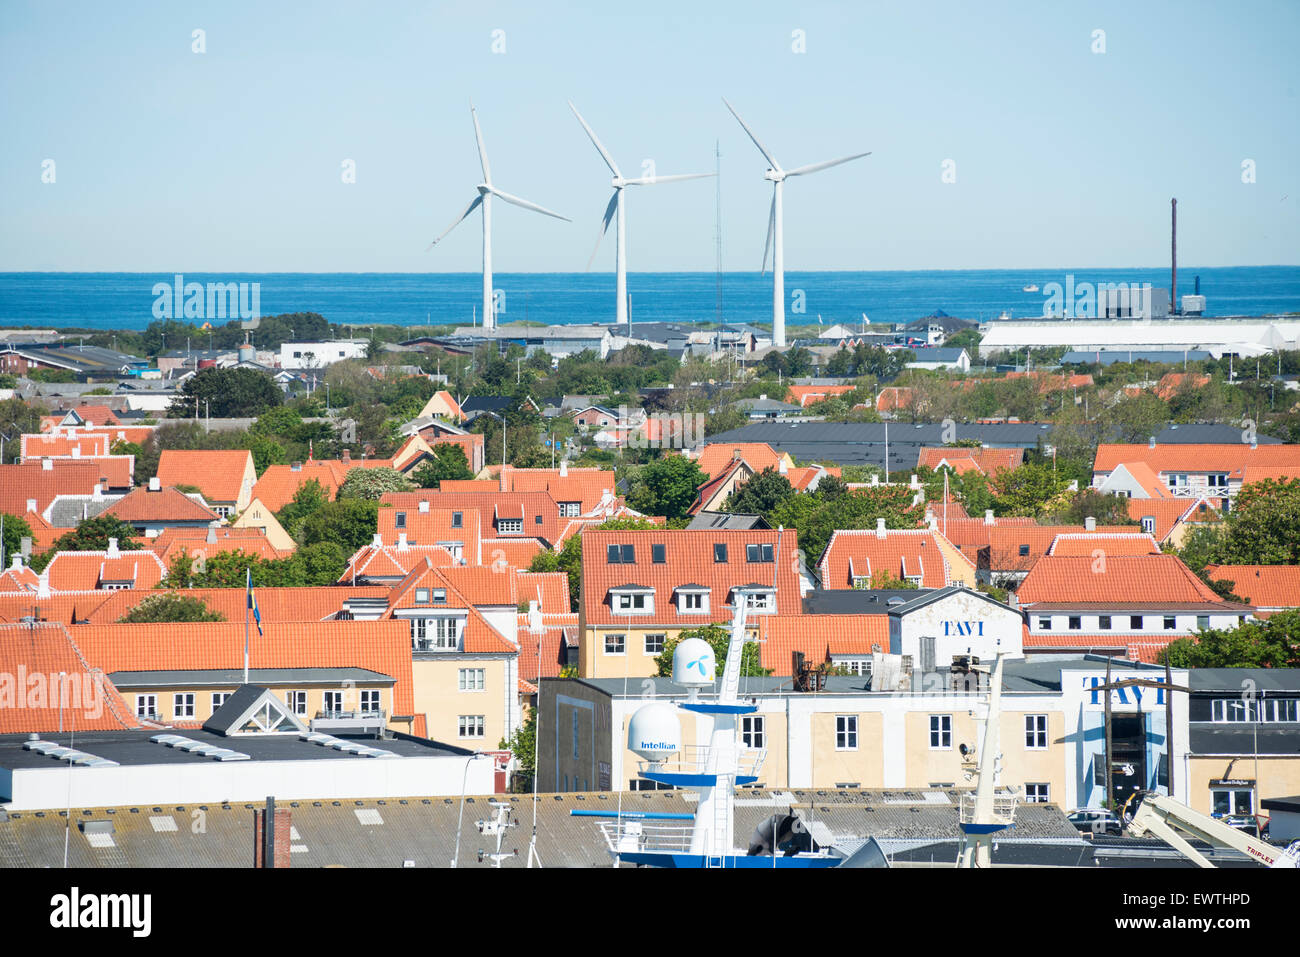 View of town and harbour, Skagen, North Jutland Region, Denmark Stock Photo